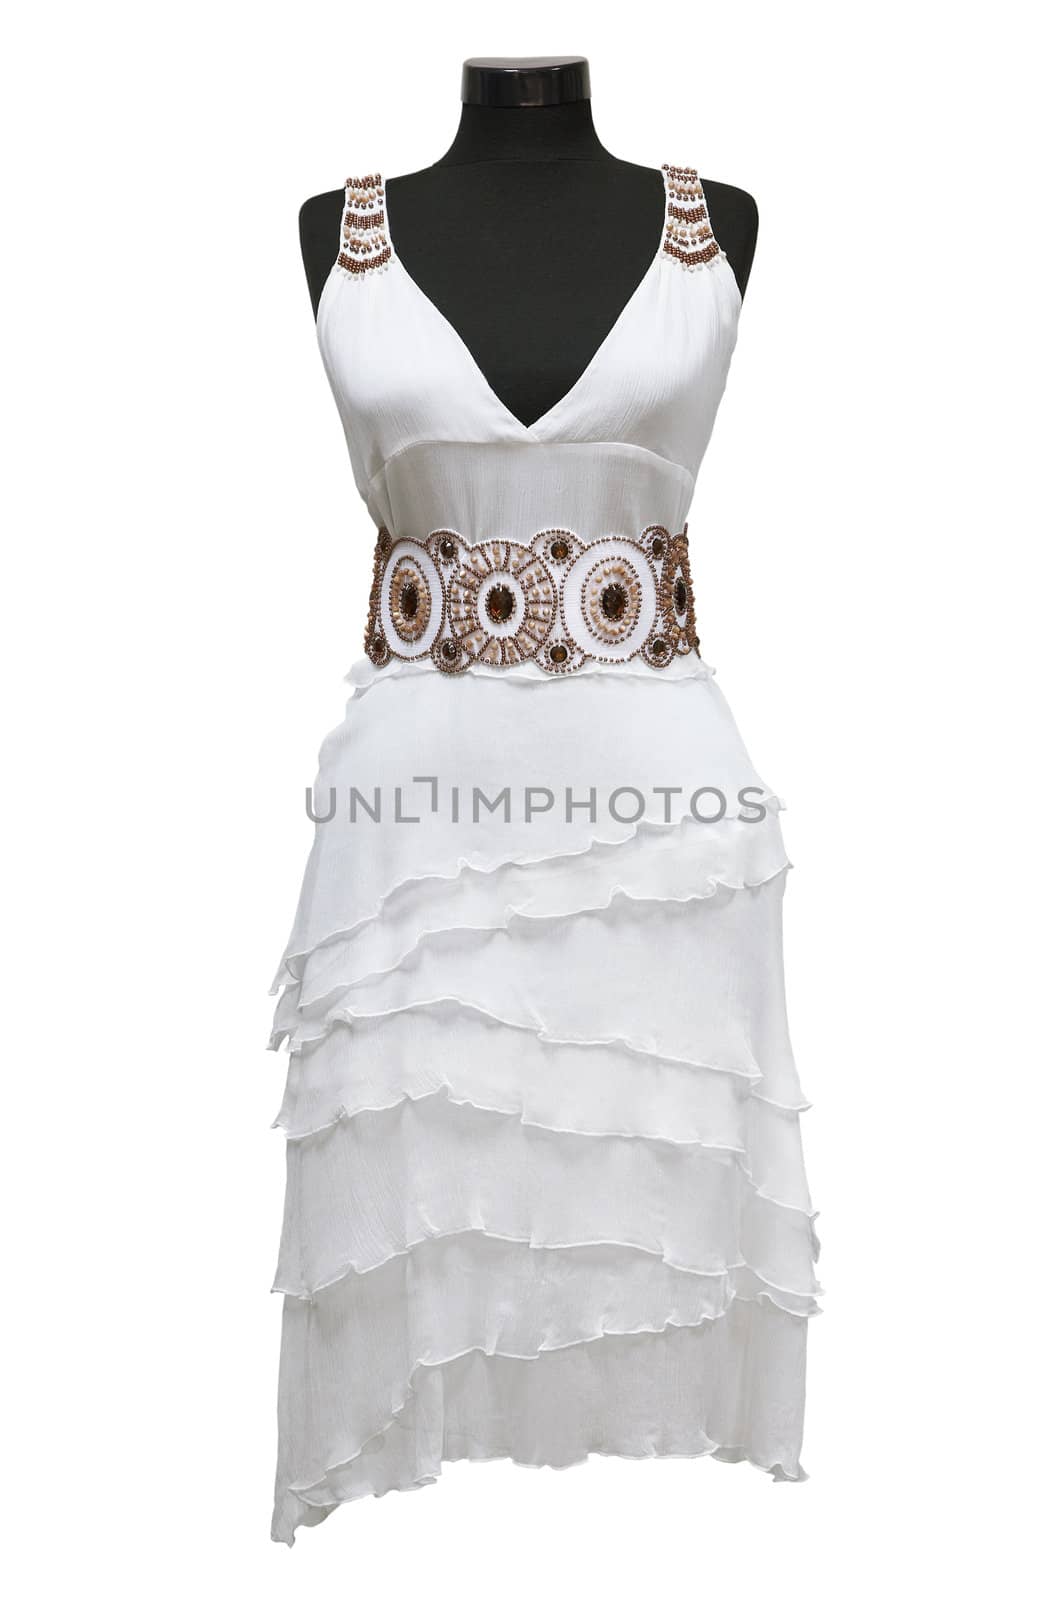 White female dress by terex